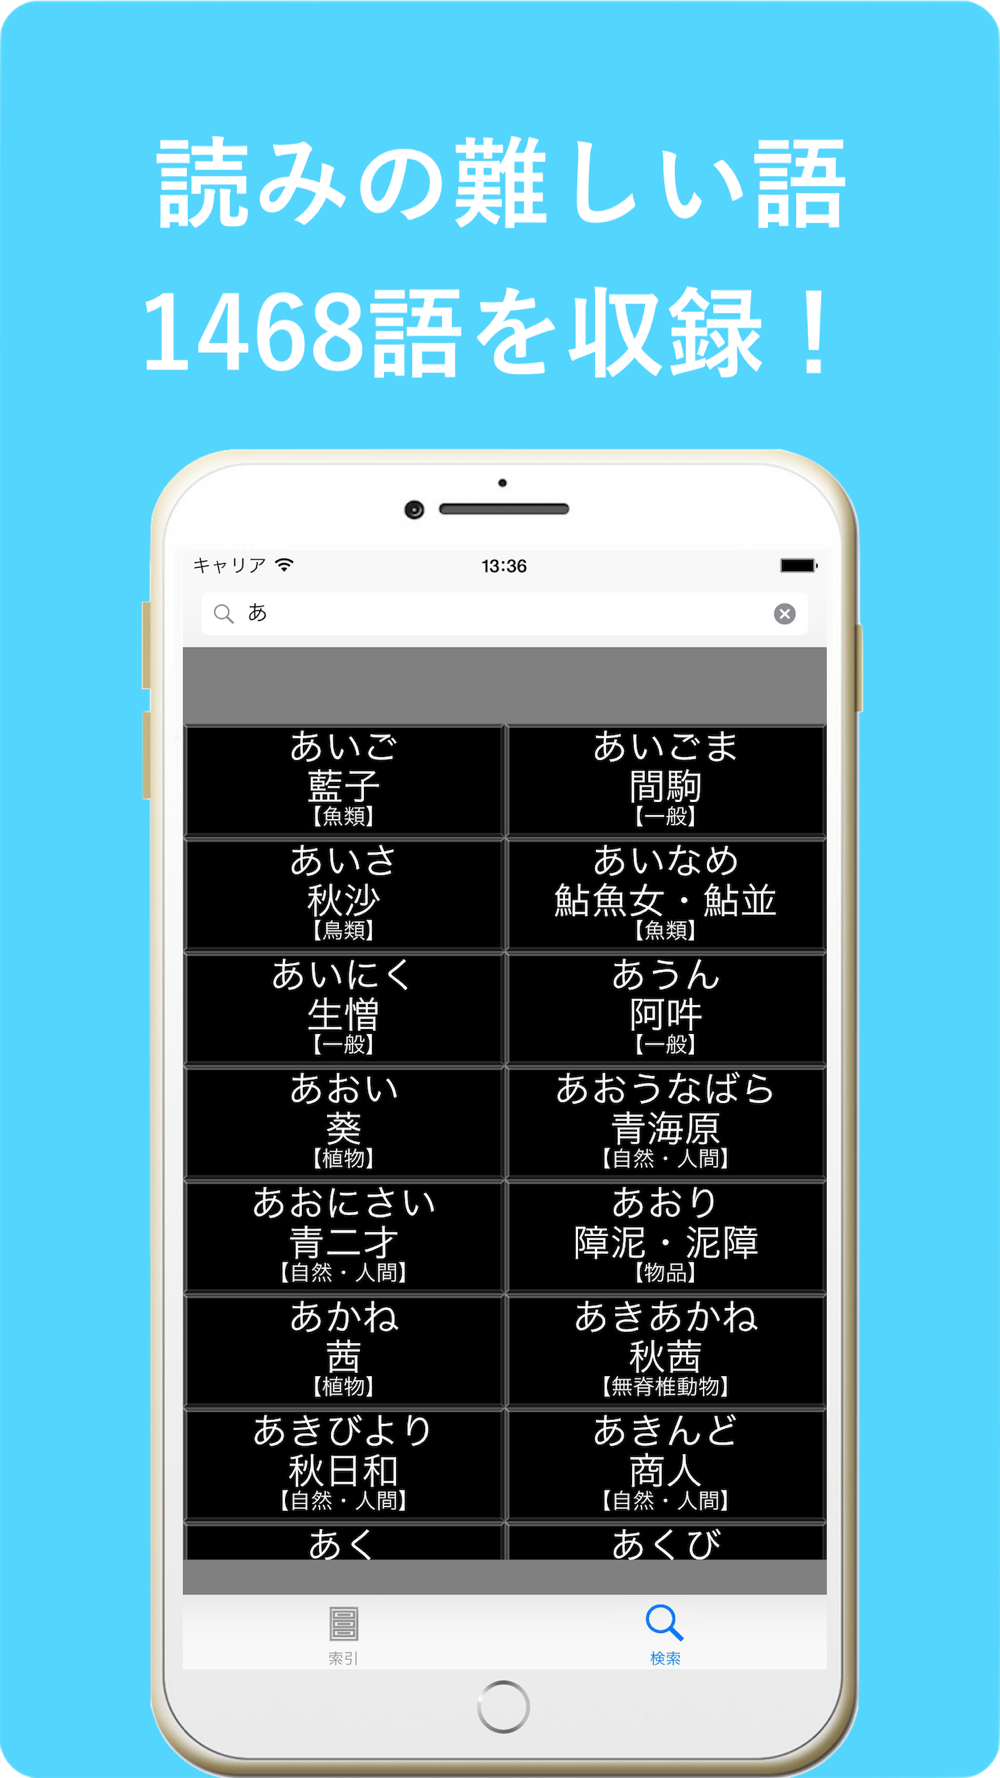 I 難読漢字辞書 Free Download App For Iphone Steprimo Com